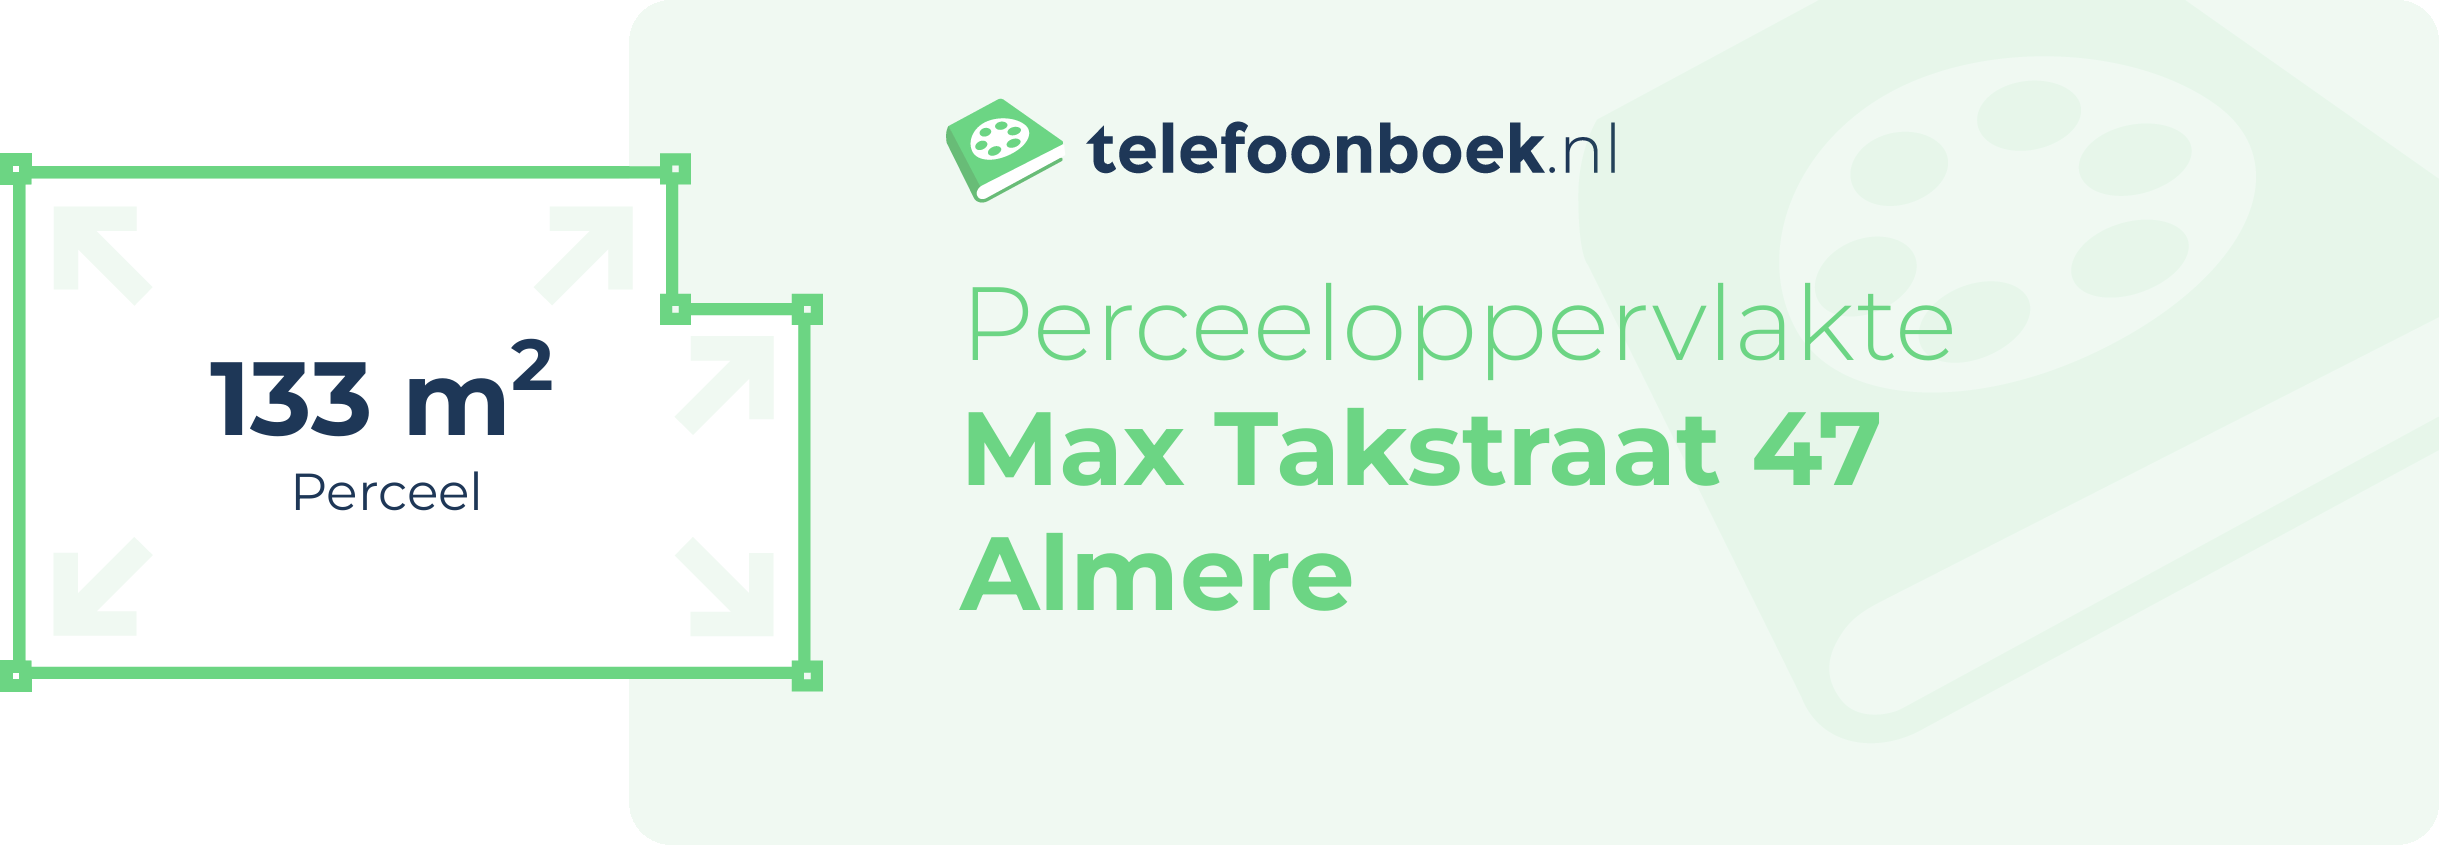 Perceeloppervlakte Max Takstraat 47 Almere